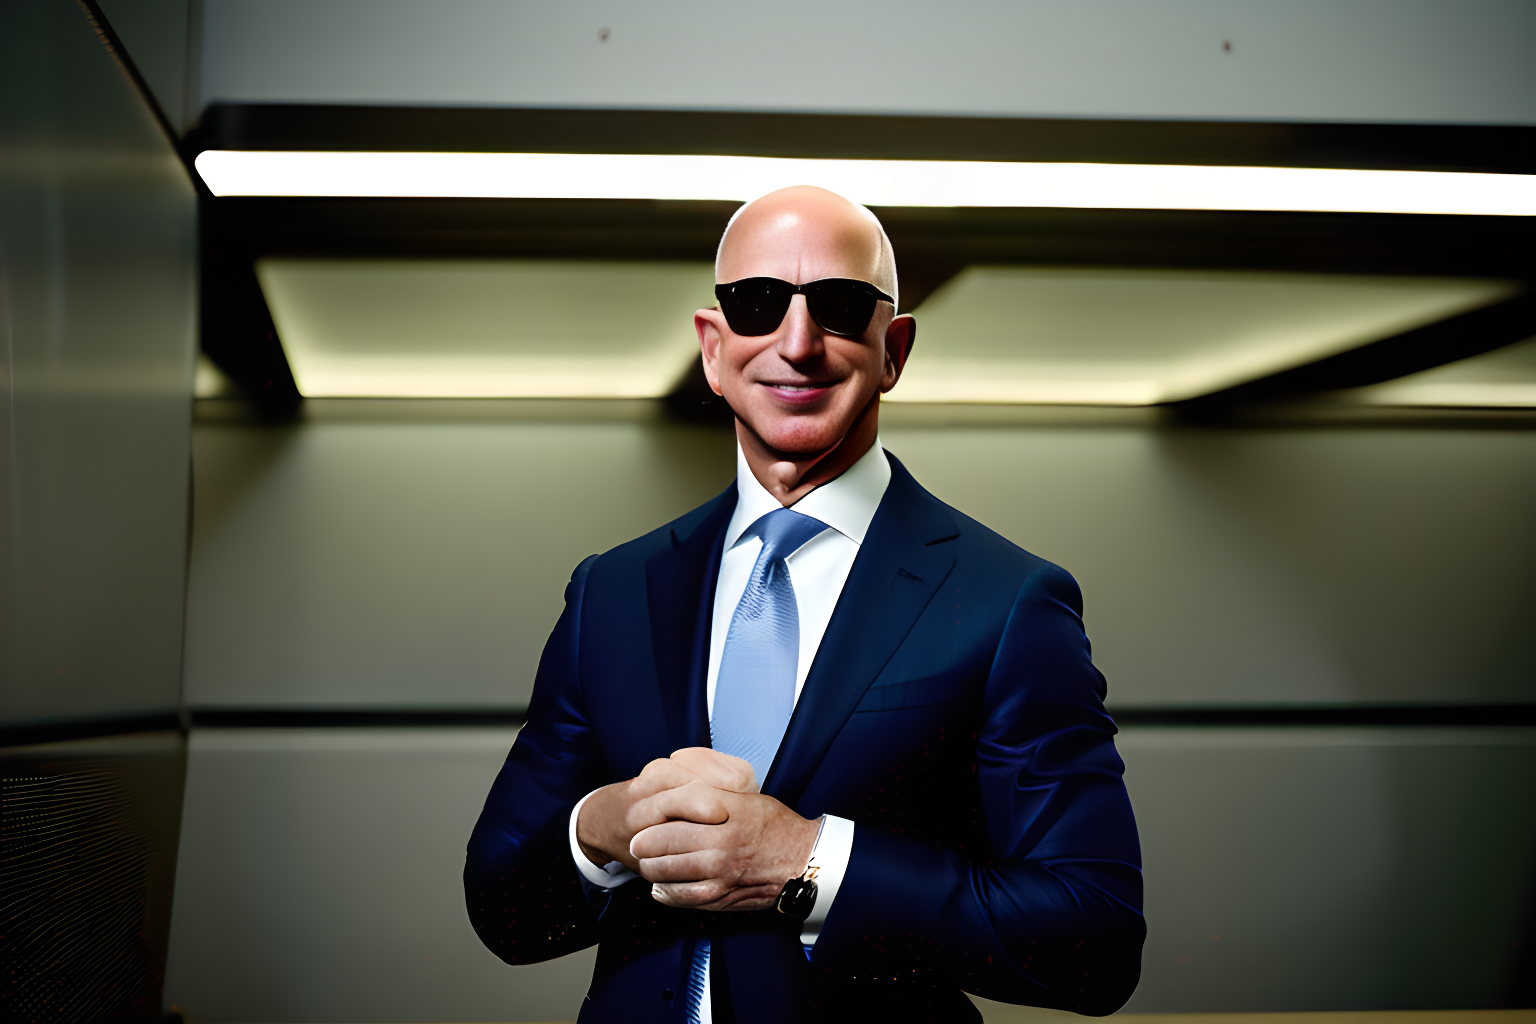 Breathtaking photograph of Jeff Bezos wearing shades and looking smug. award-winning, professional, highly detailed.